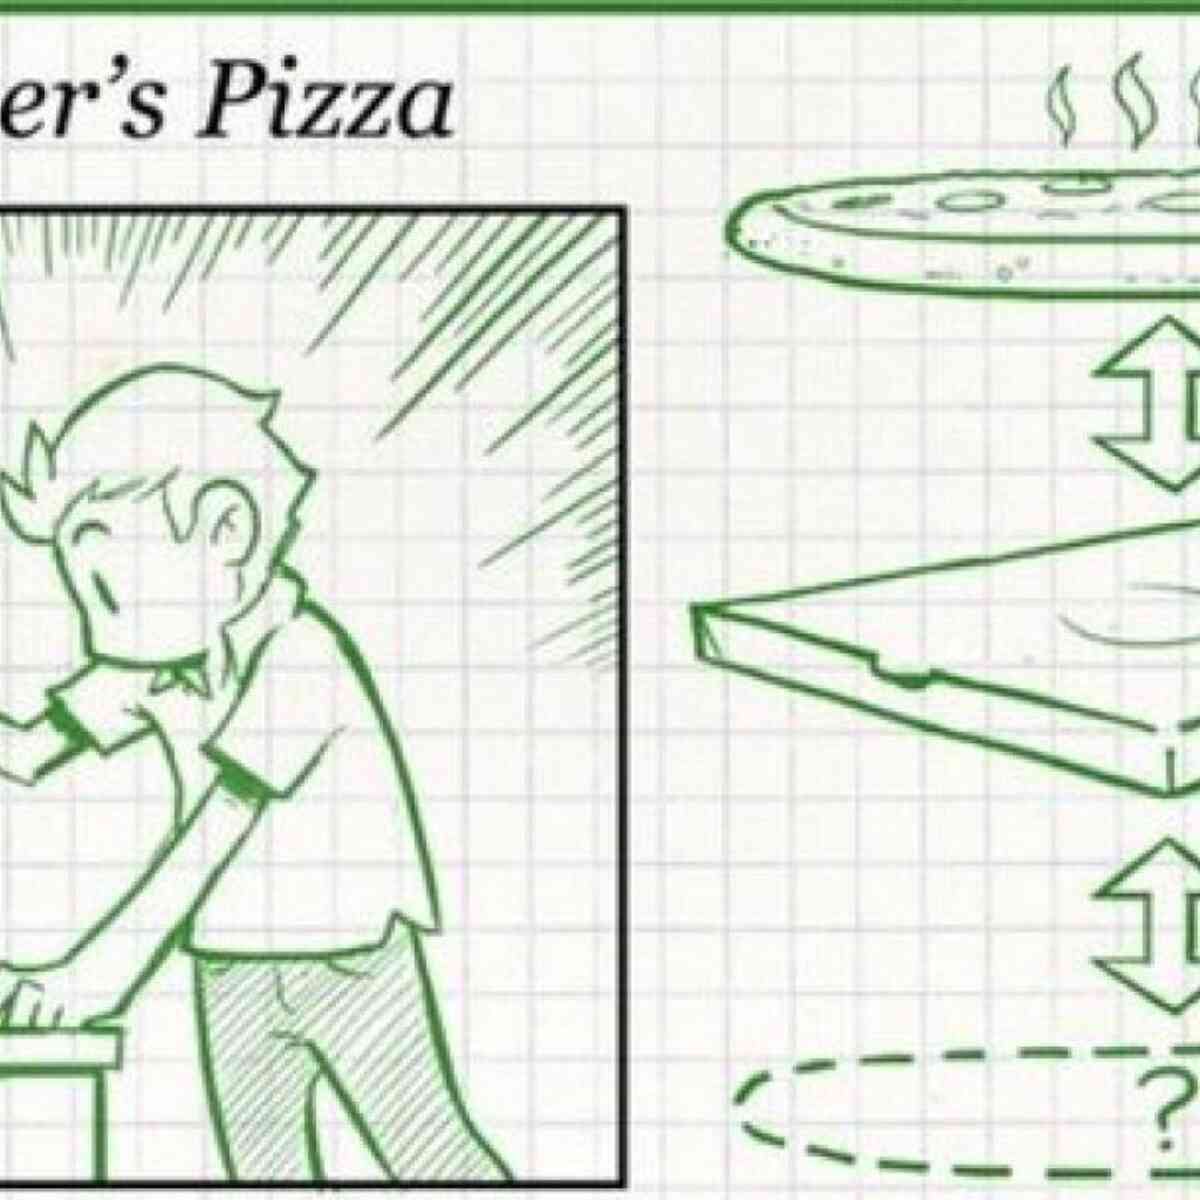 Schrodinger pizzaria 4